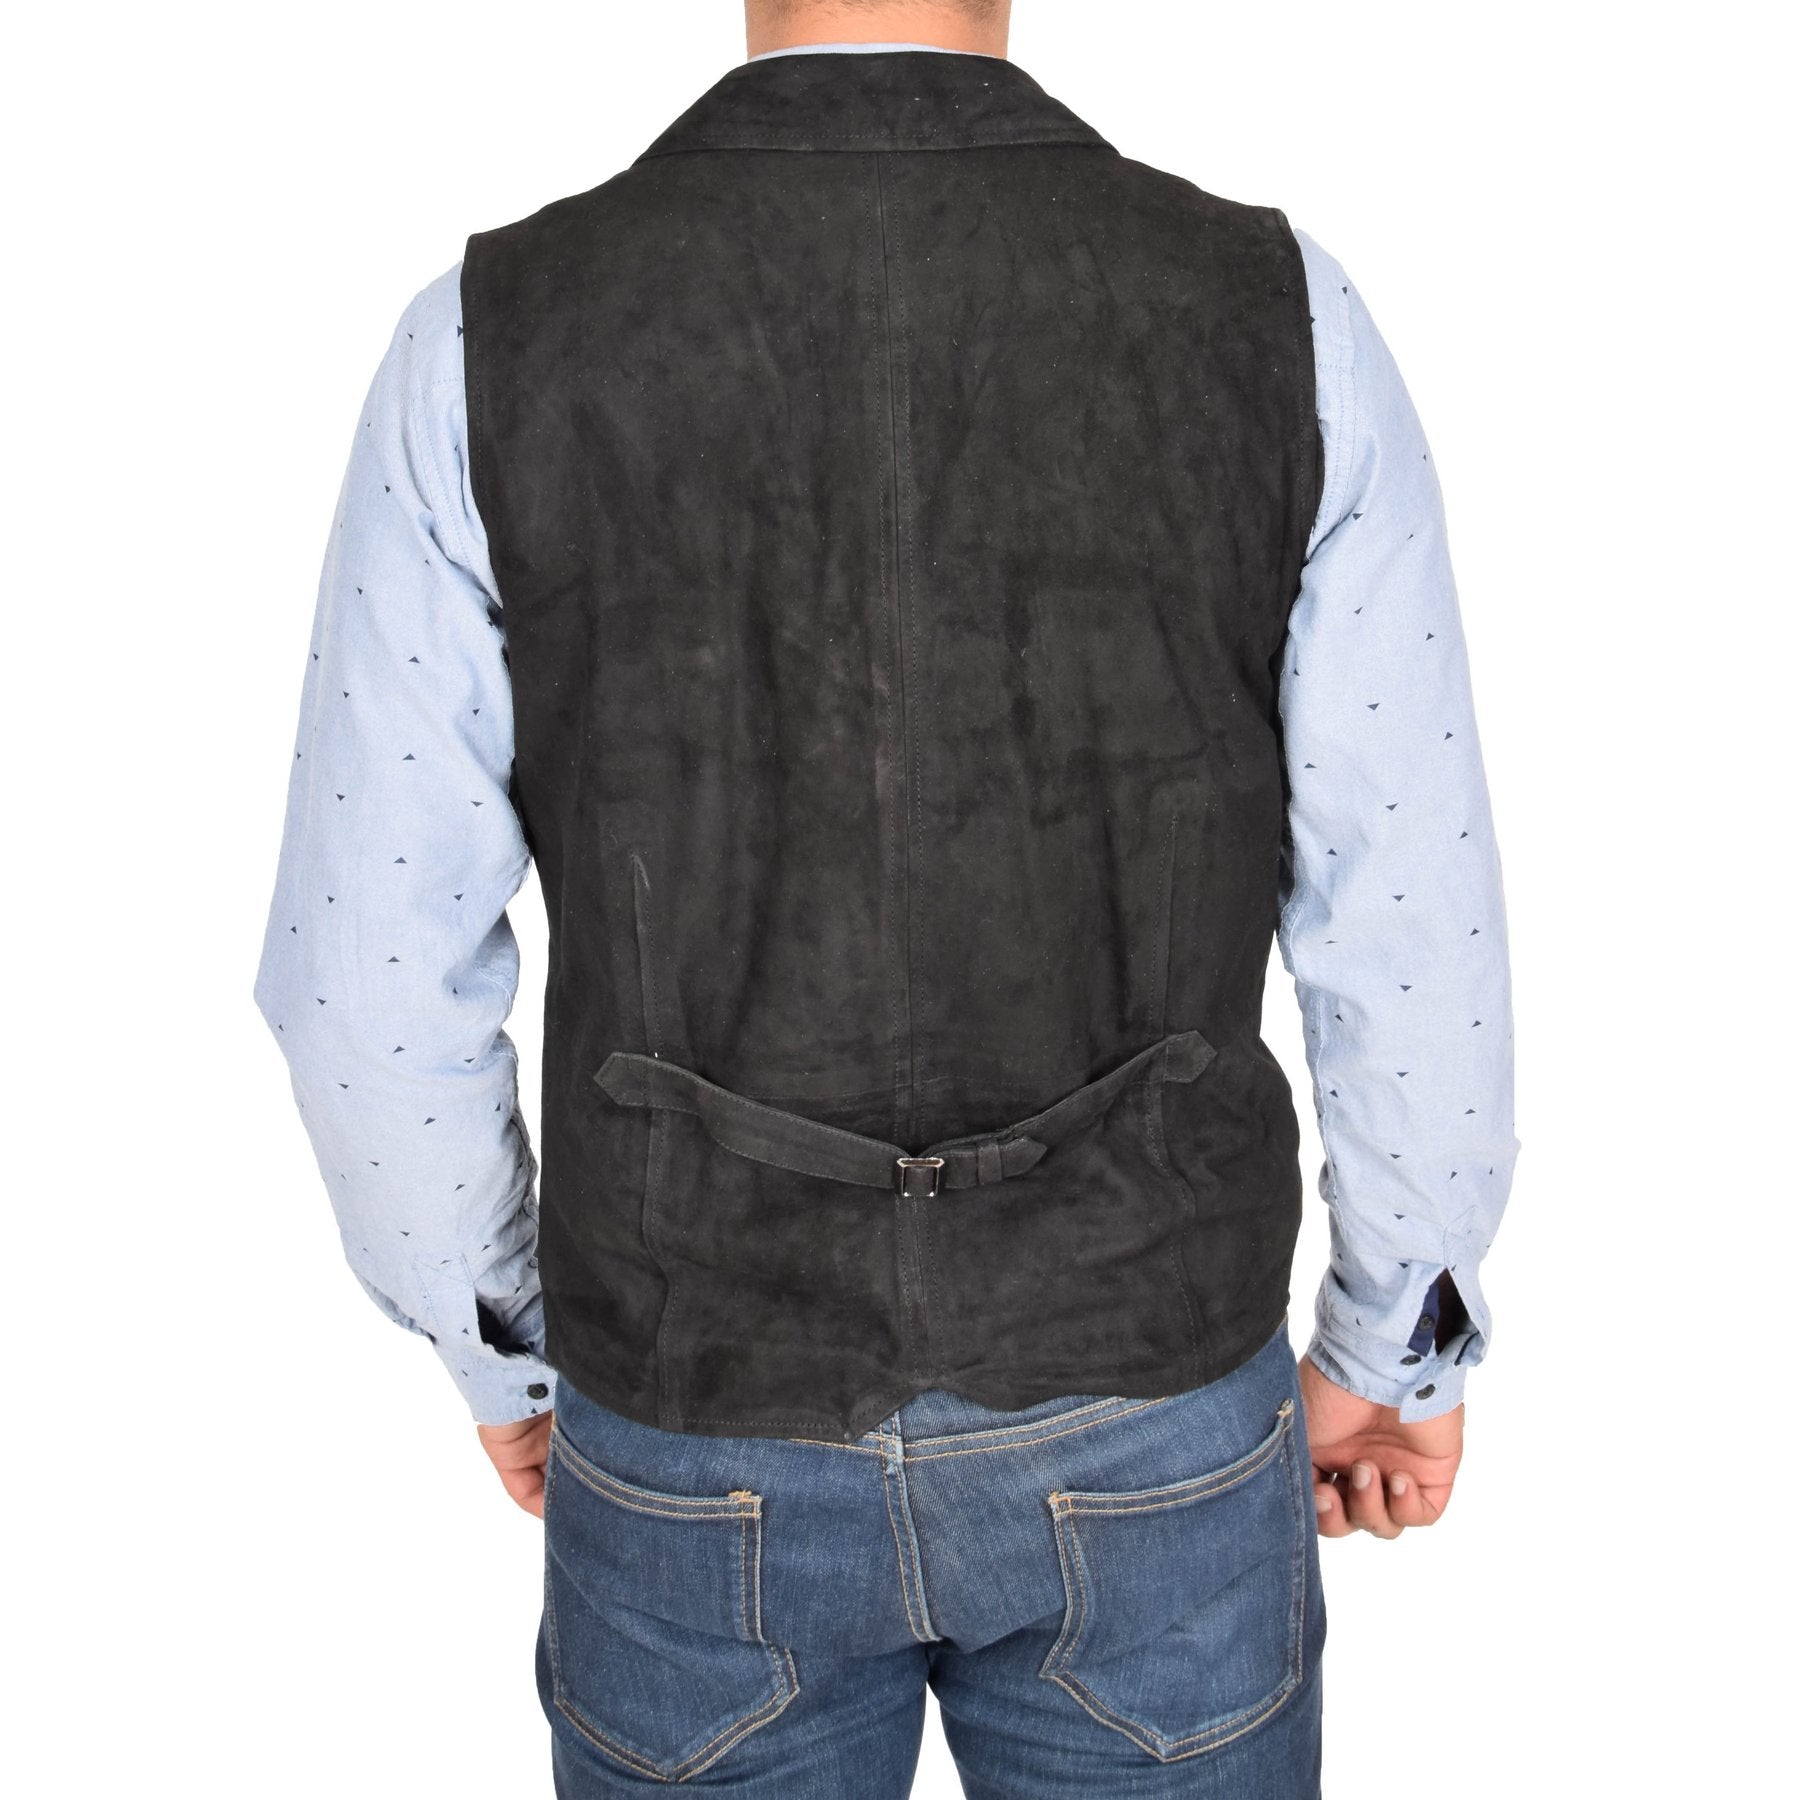 Spine Spark Men's Black Soft Suede Leather Classic Style Vest